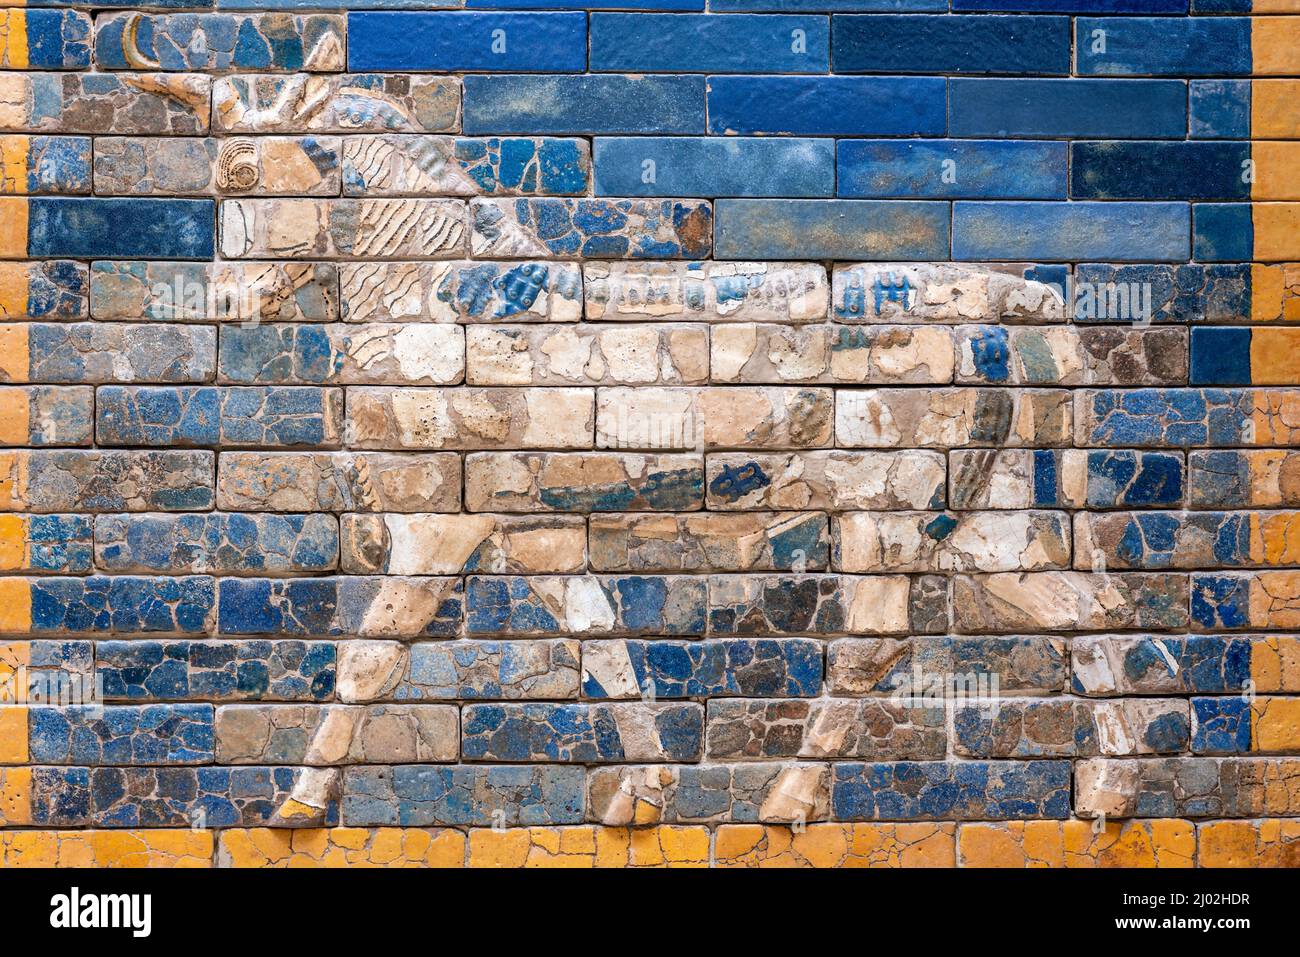 The Ishtar Gate (Arabic: بوابة عشتار) was the eighth gate to the inner city of Babylon Stock Photo